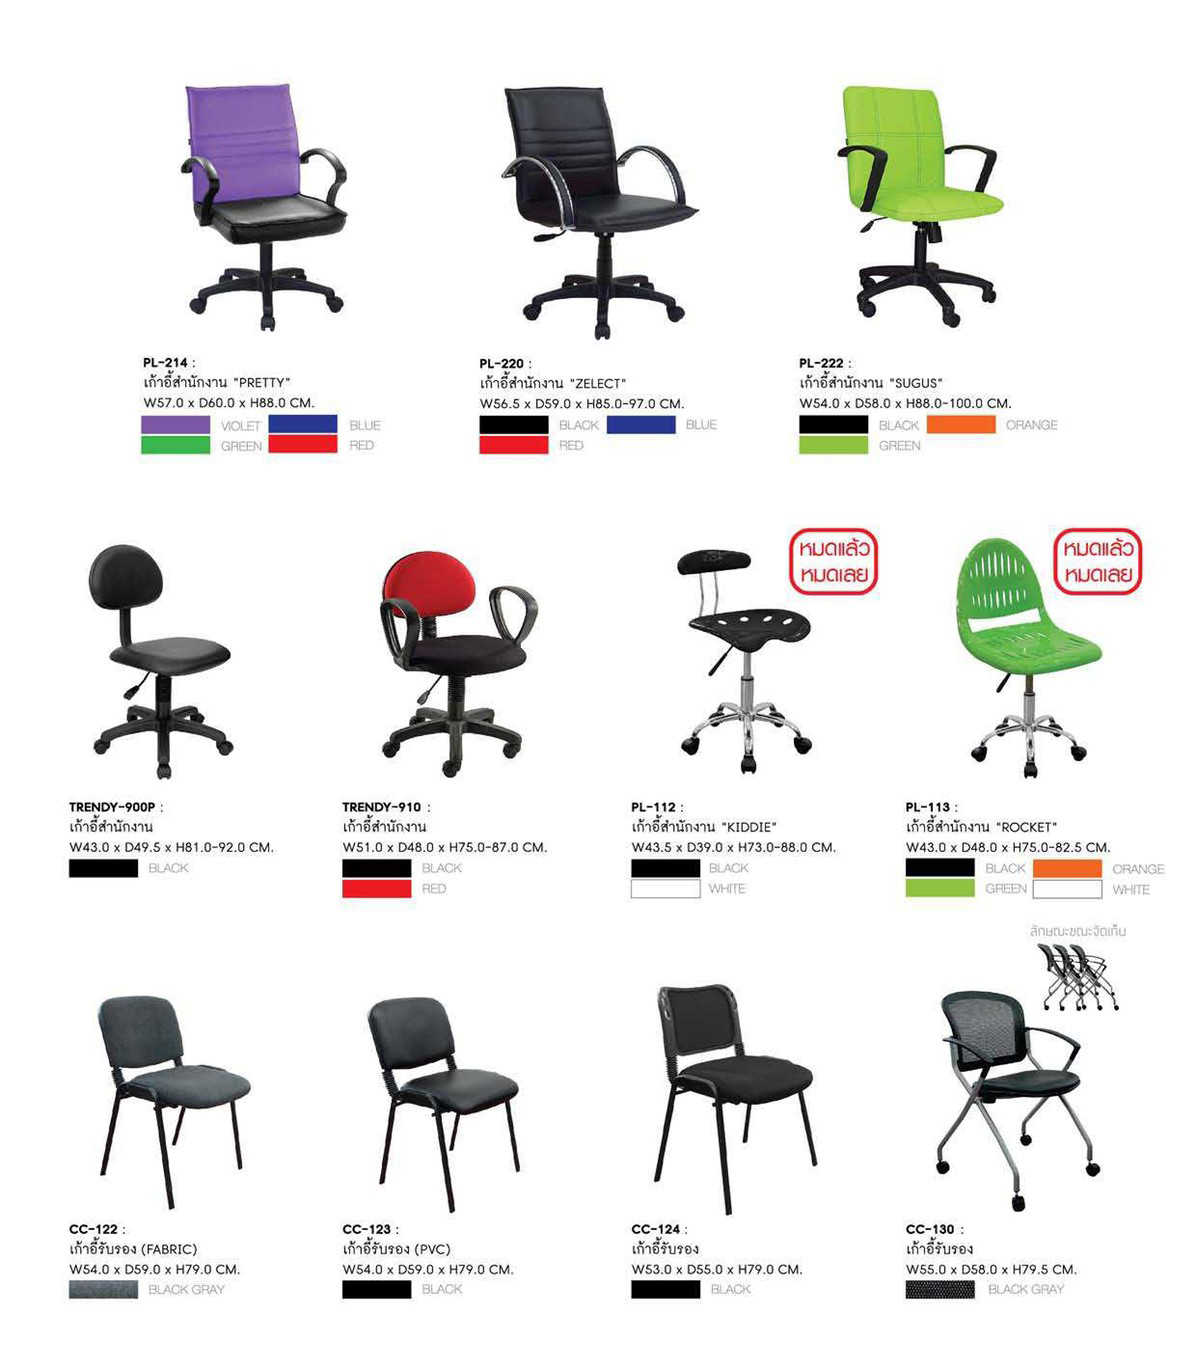 33029::TRENDY-910::เก้าอี้สำนักงาน รุ่น TRENDY-910 ขนาด ก510xล480xส750-850 มม. มีสีดำ,สีดำ/แดง เก้าอี้สำนักงาน SURE